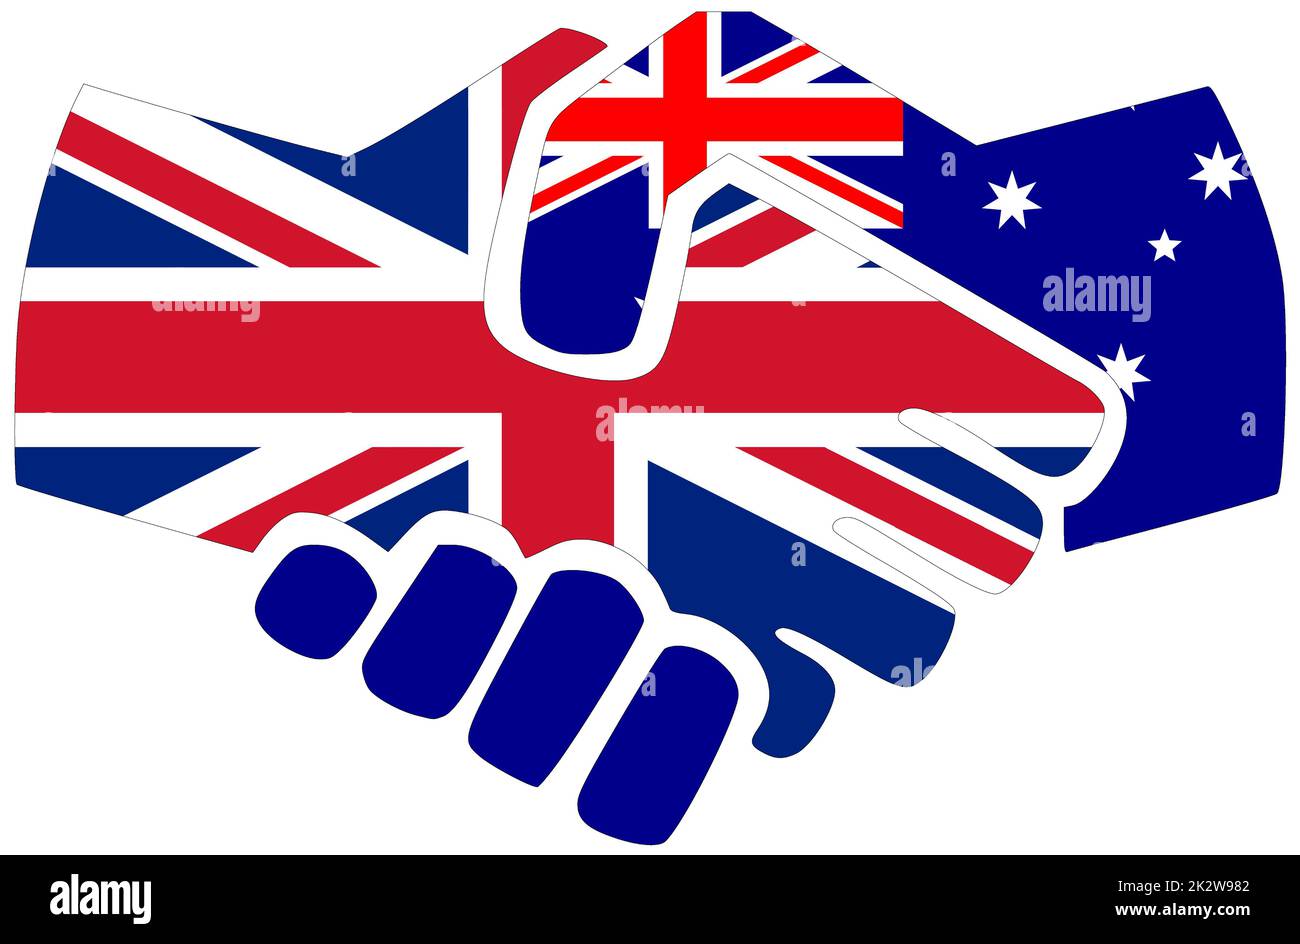 UK - Australia : Handshake, symbol of agreement or friendship Stock Photo